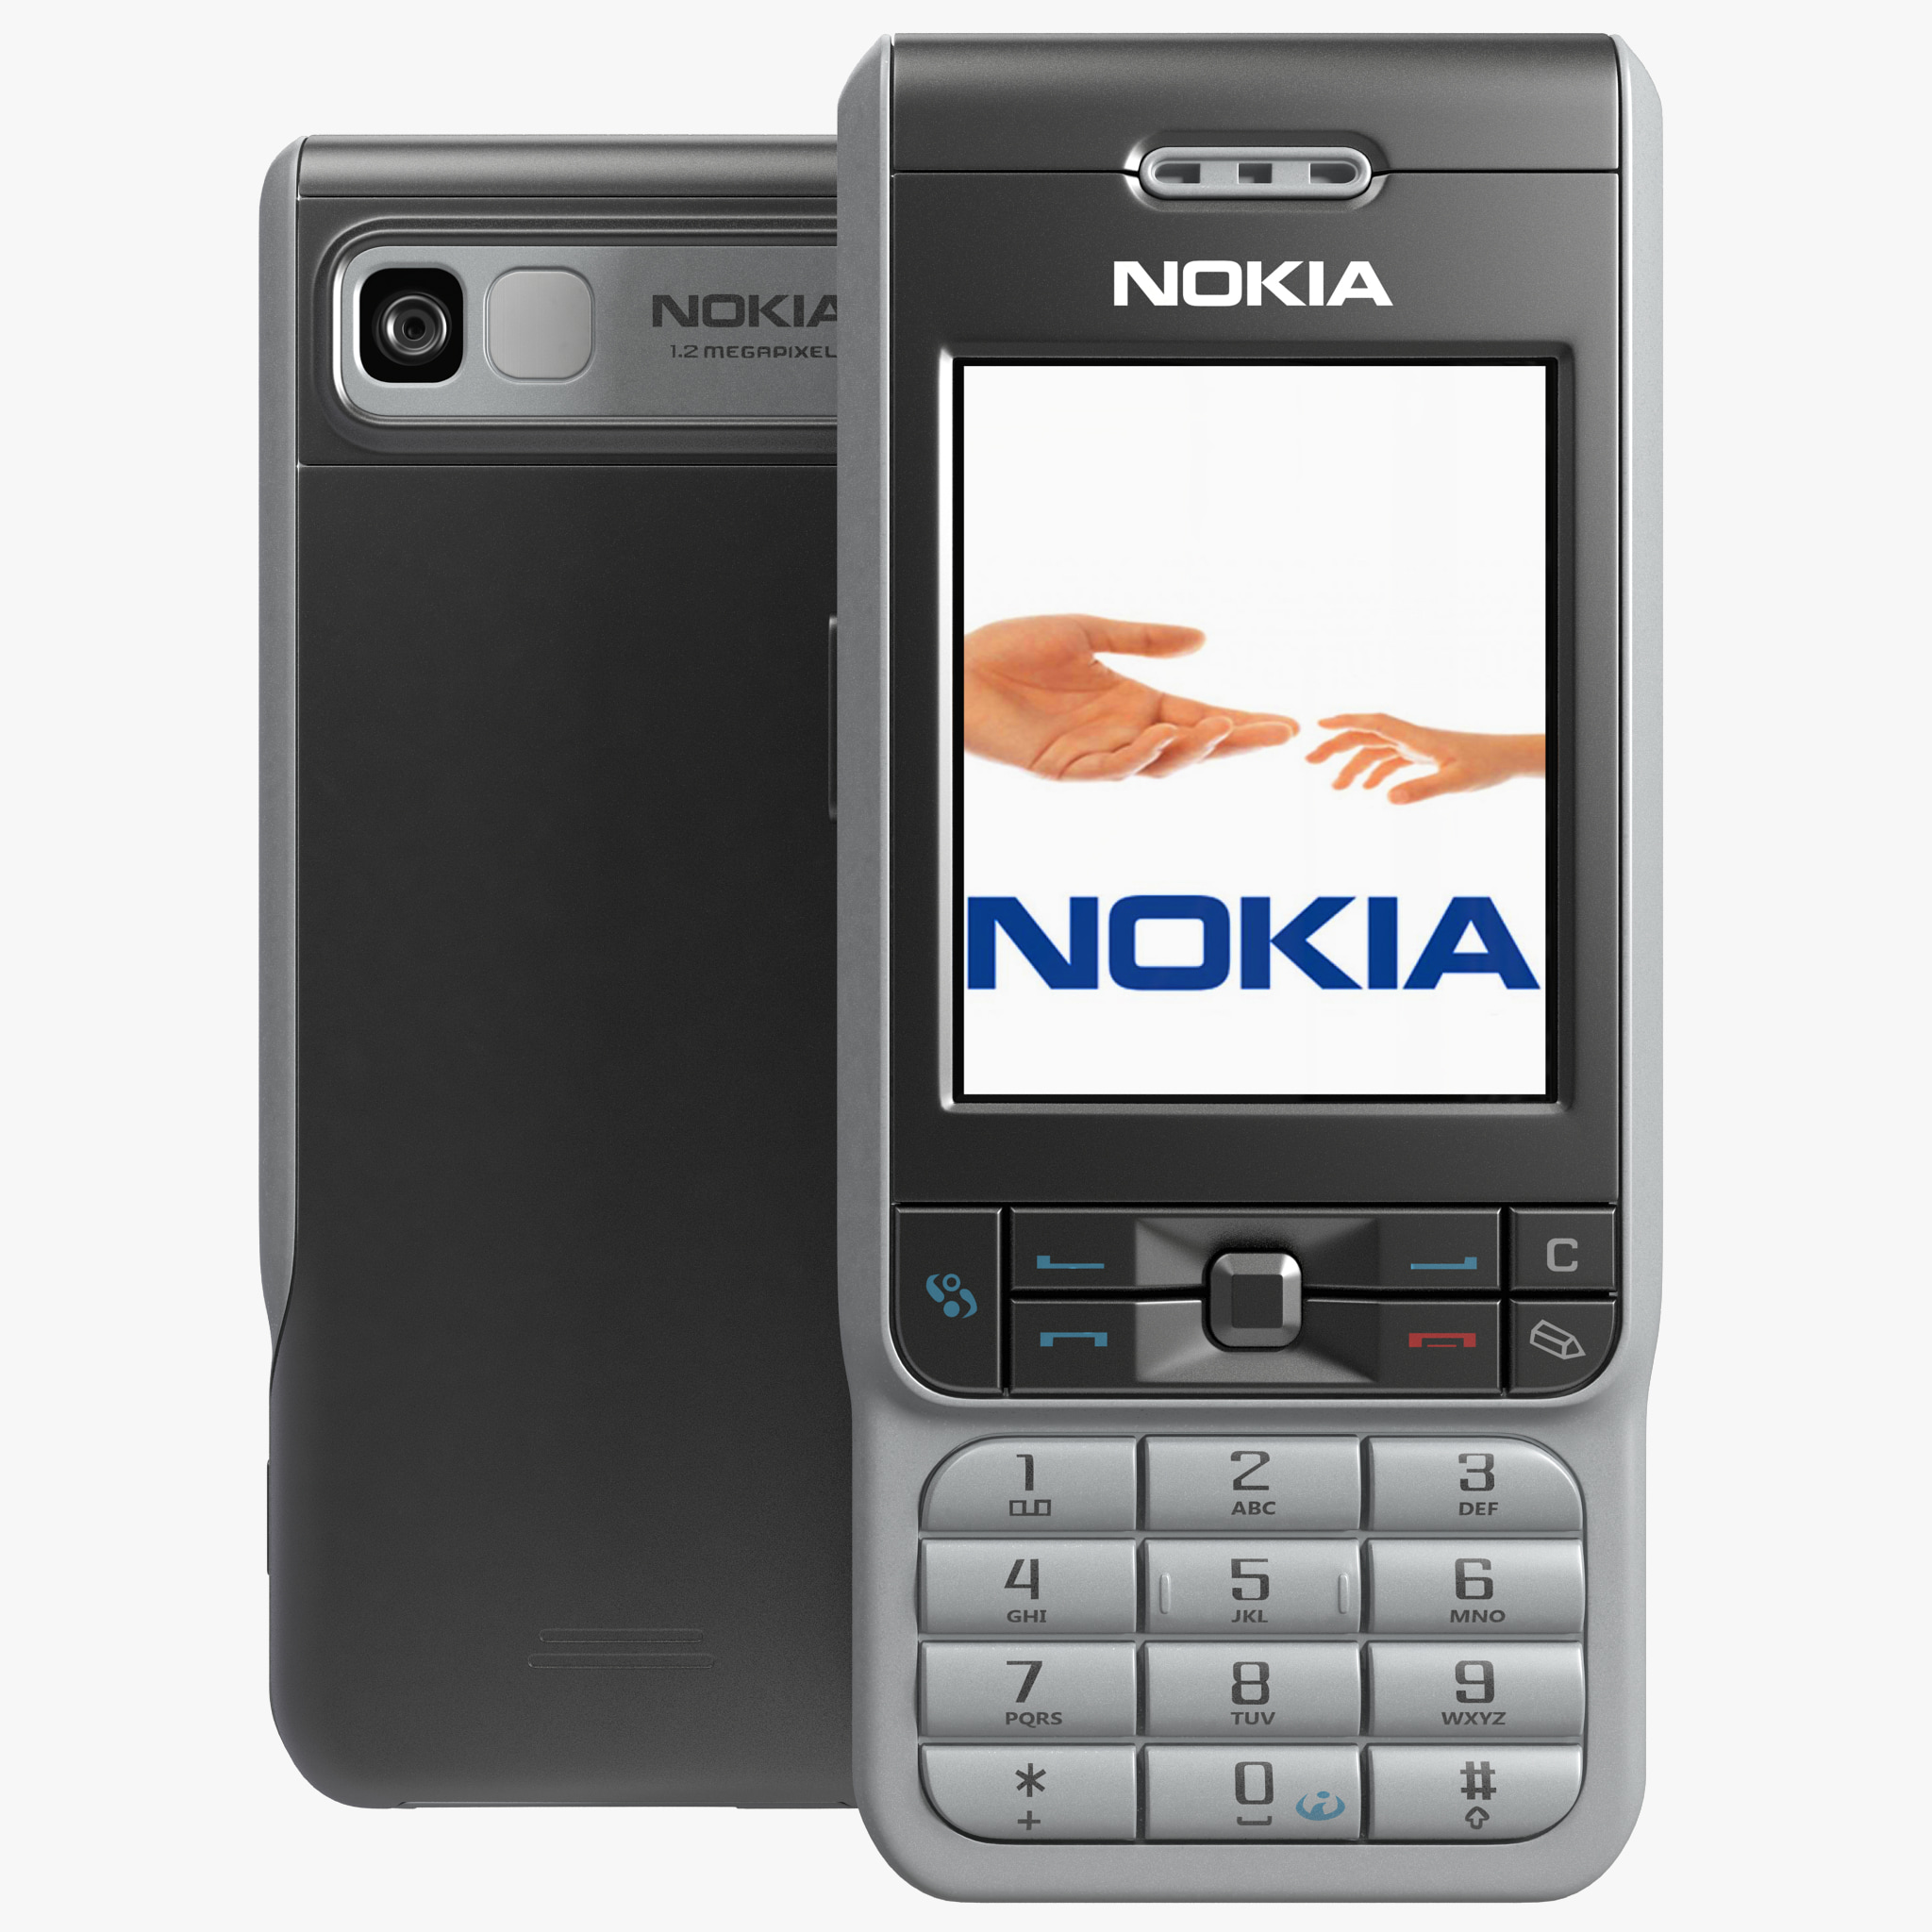 Nokia 3230 specs, review, release date - PhonesData